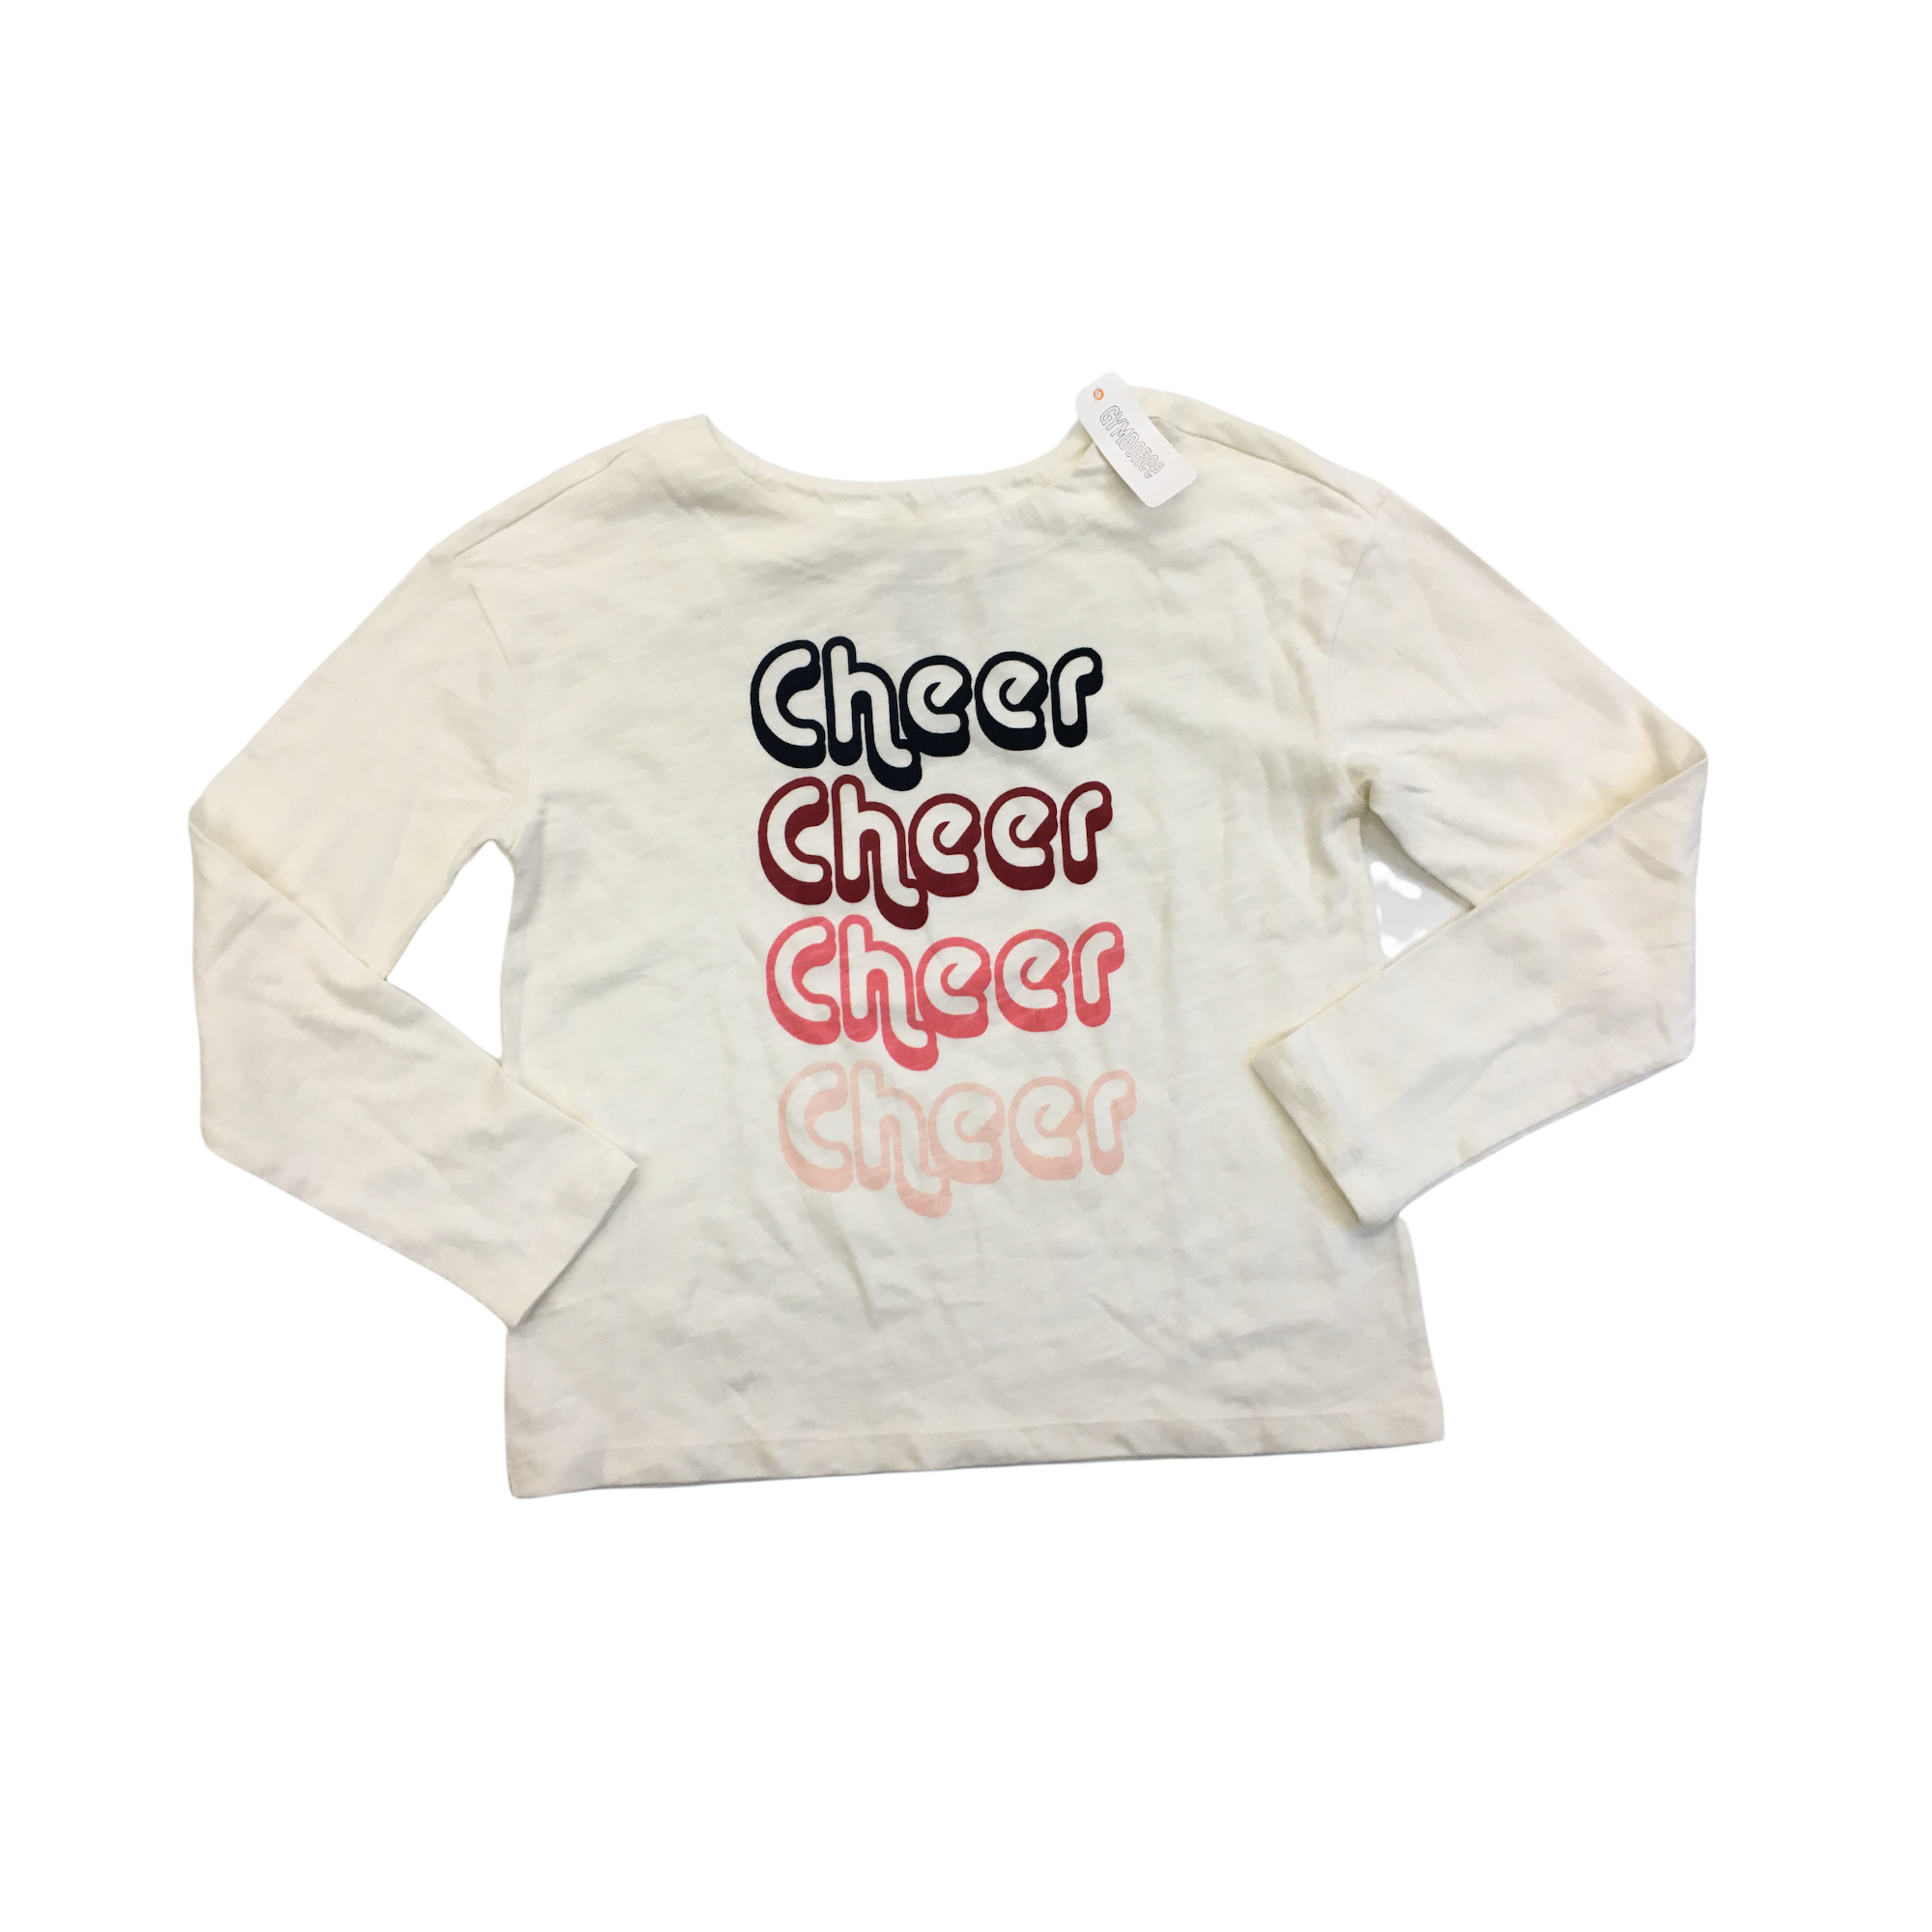 New Girl's White Top Shirt NWT Toddler Kids Size 12m Osh Kosh Oshkosh NYC Stars